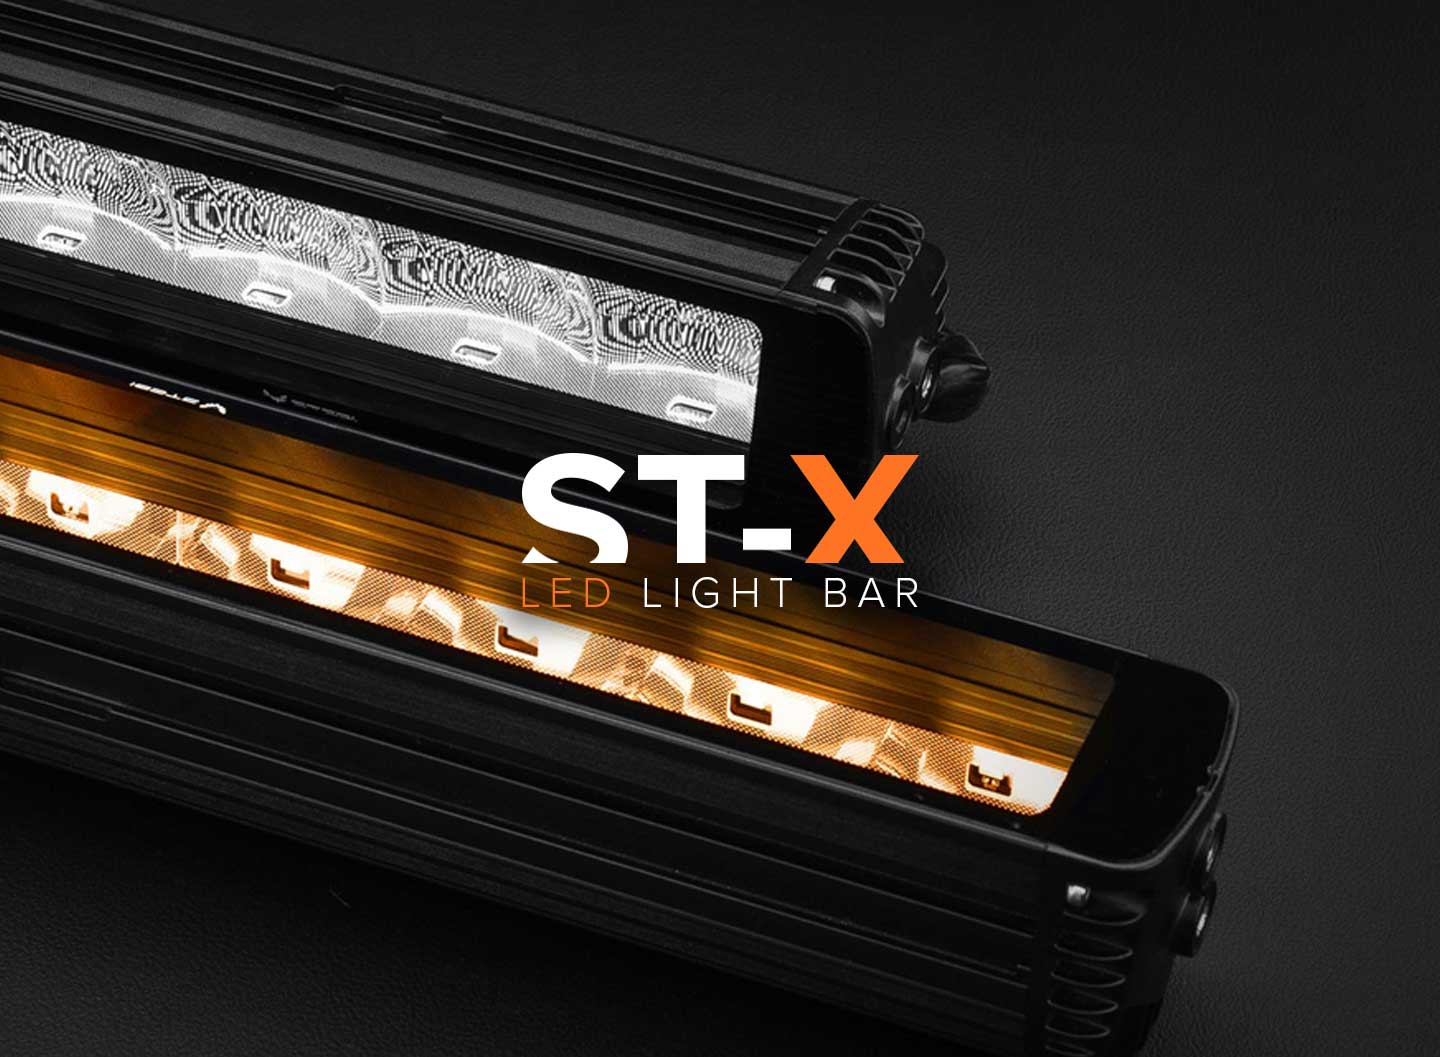 NEW Stedi ST-X E-MARK LED light bar